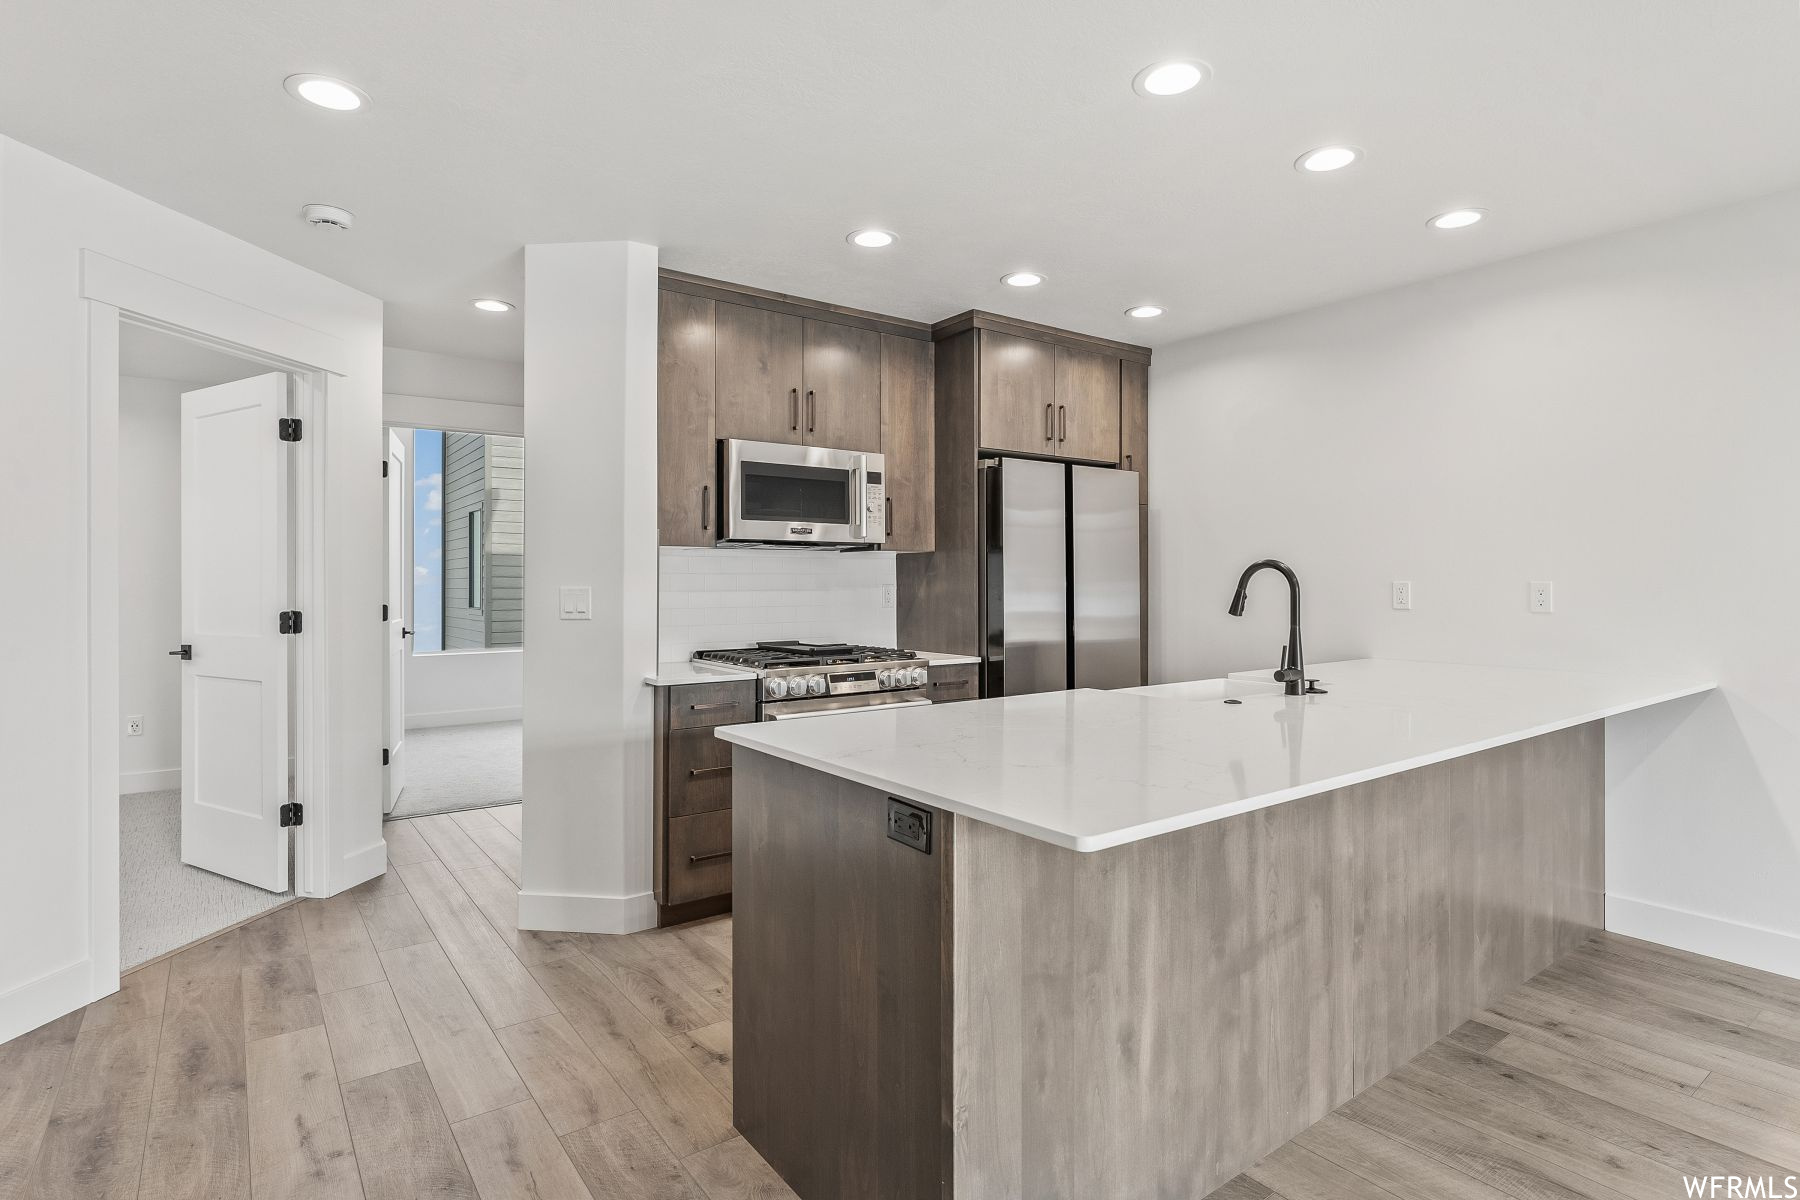 Kitchen with sink, light hardwood / wood-style flooring, stainless steel appliances, and backsplash